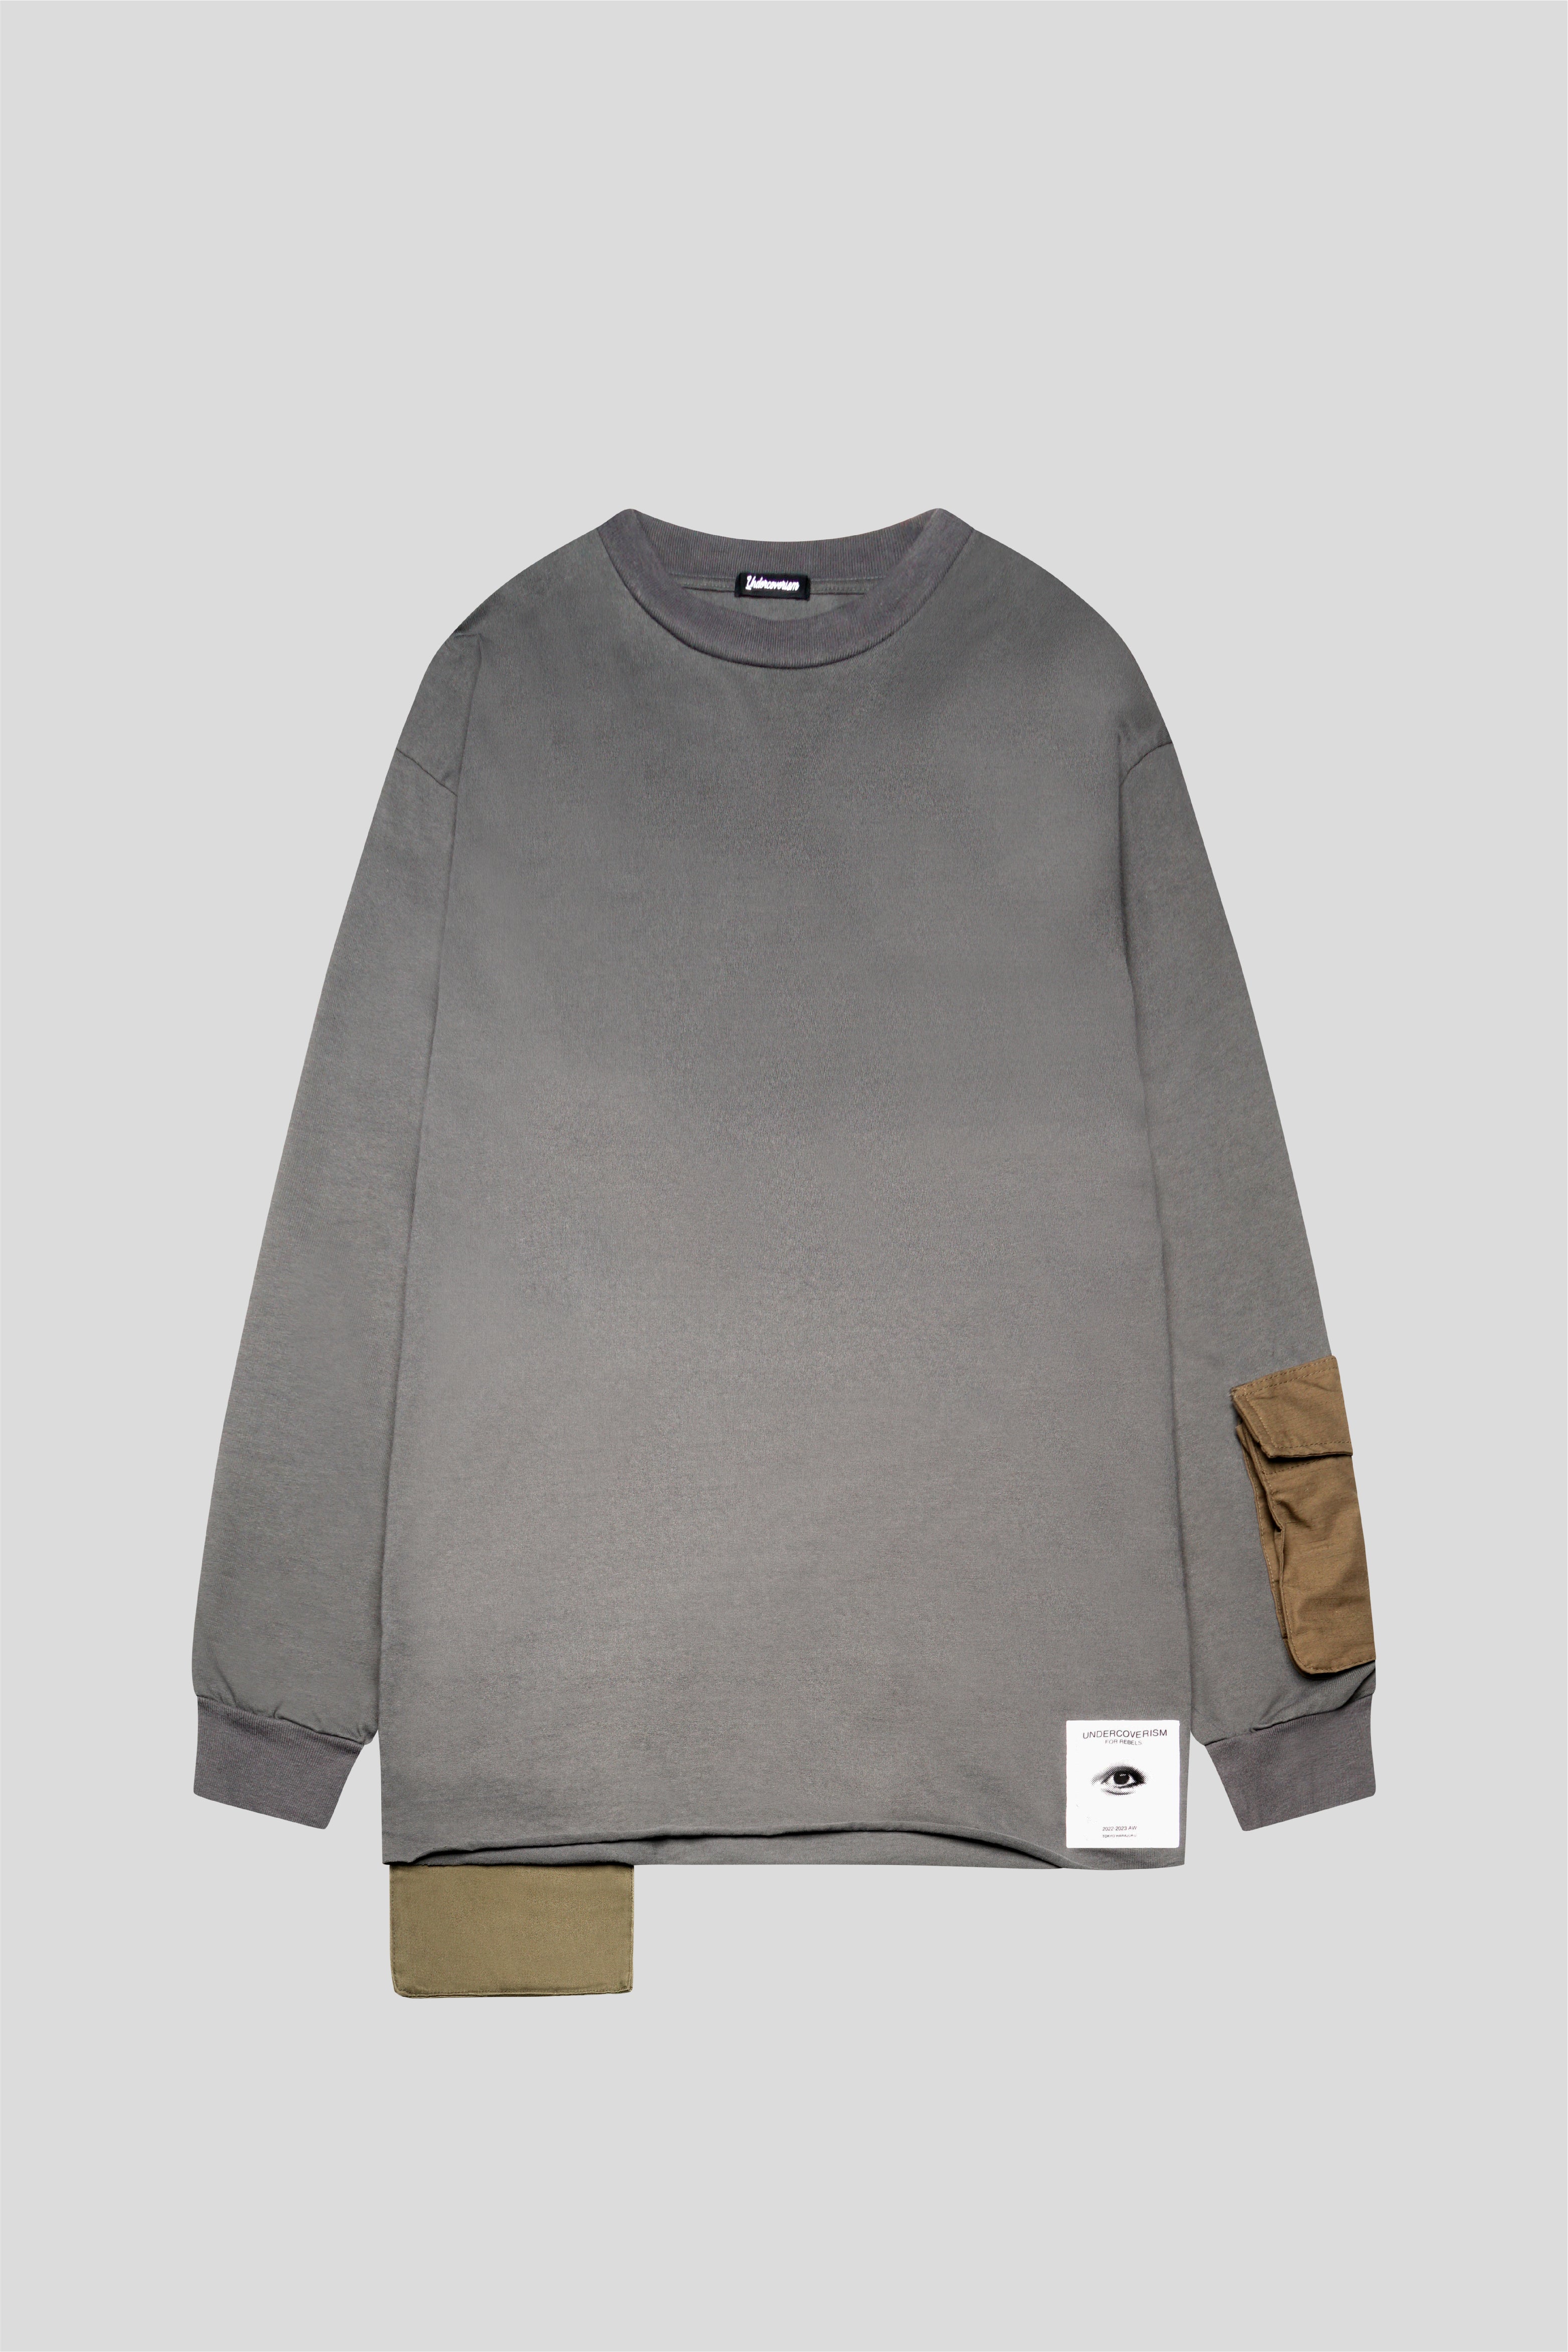 Selectshop FRAME - UNDERCOVERISM Sweat Shirt Sweats-Knits Concept Store Dubai